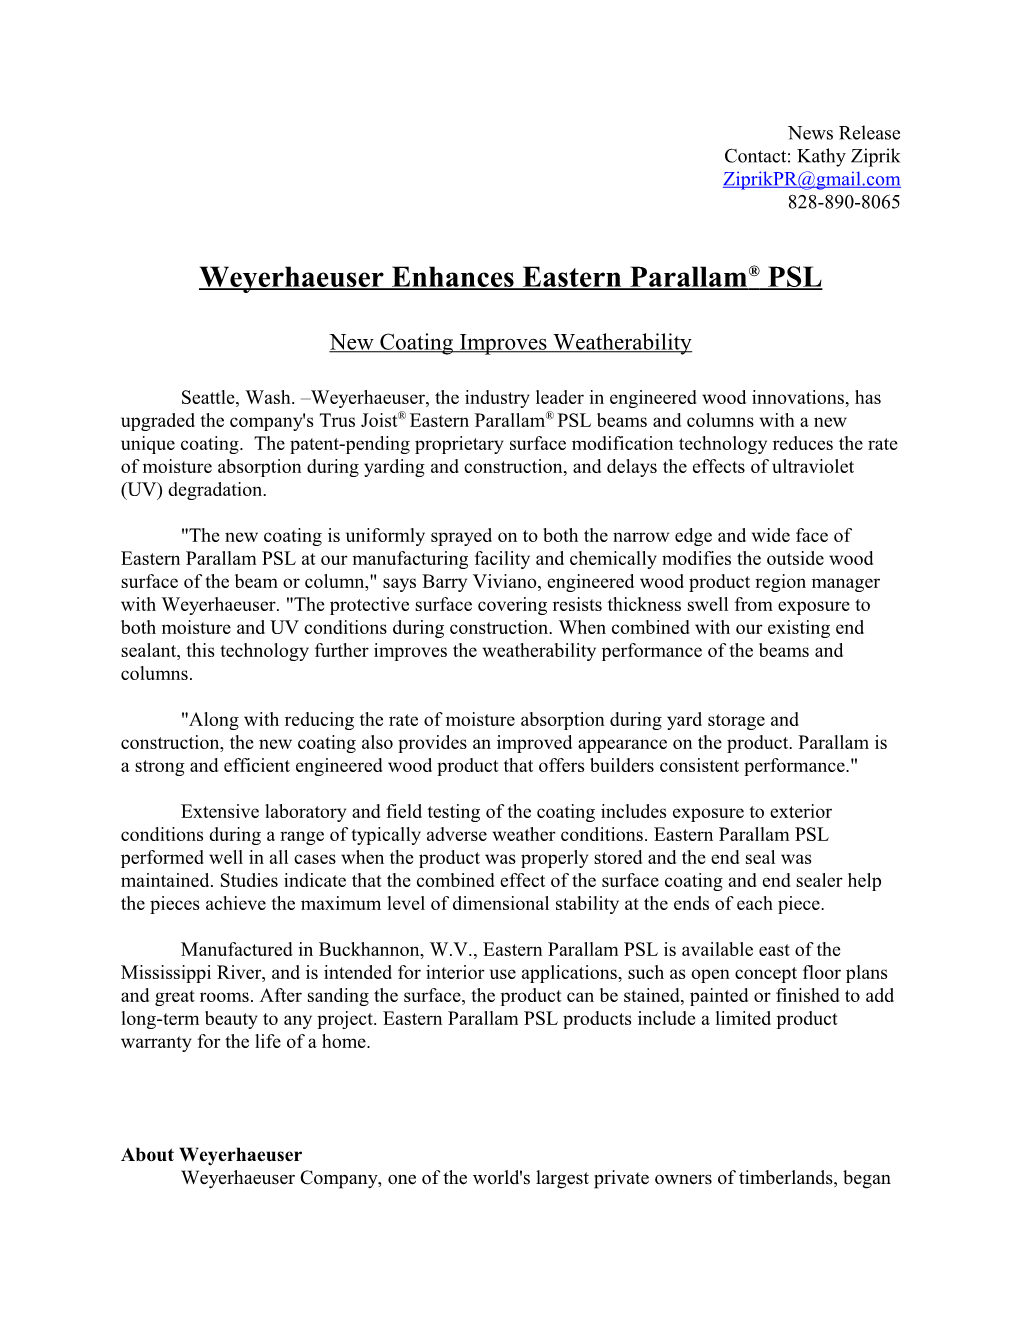 Weyerhaeuser Enhances Eastern Parallam PSL